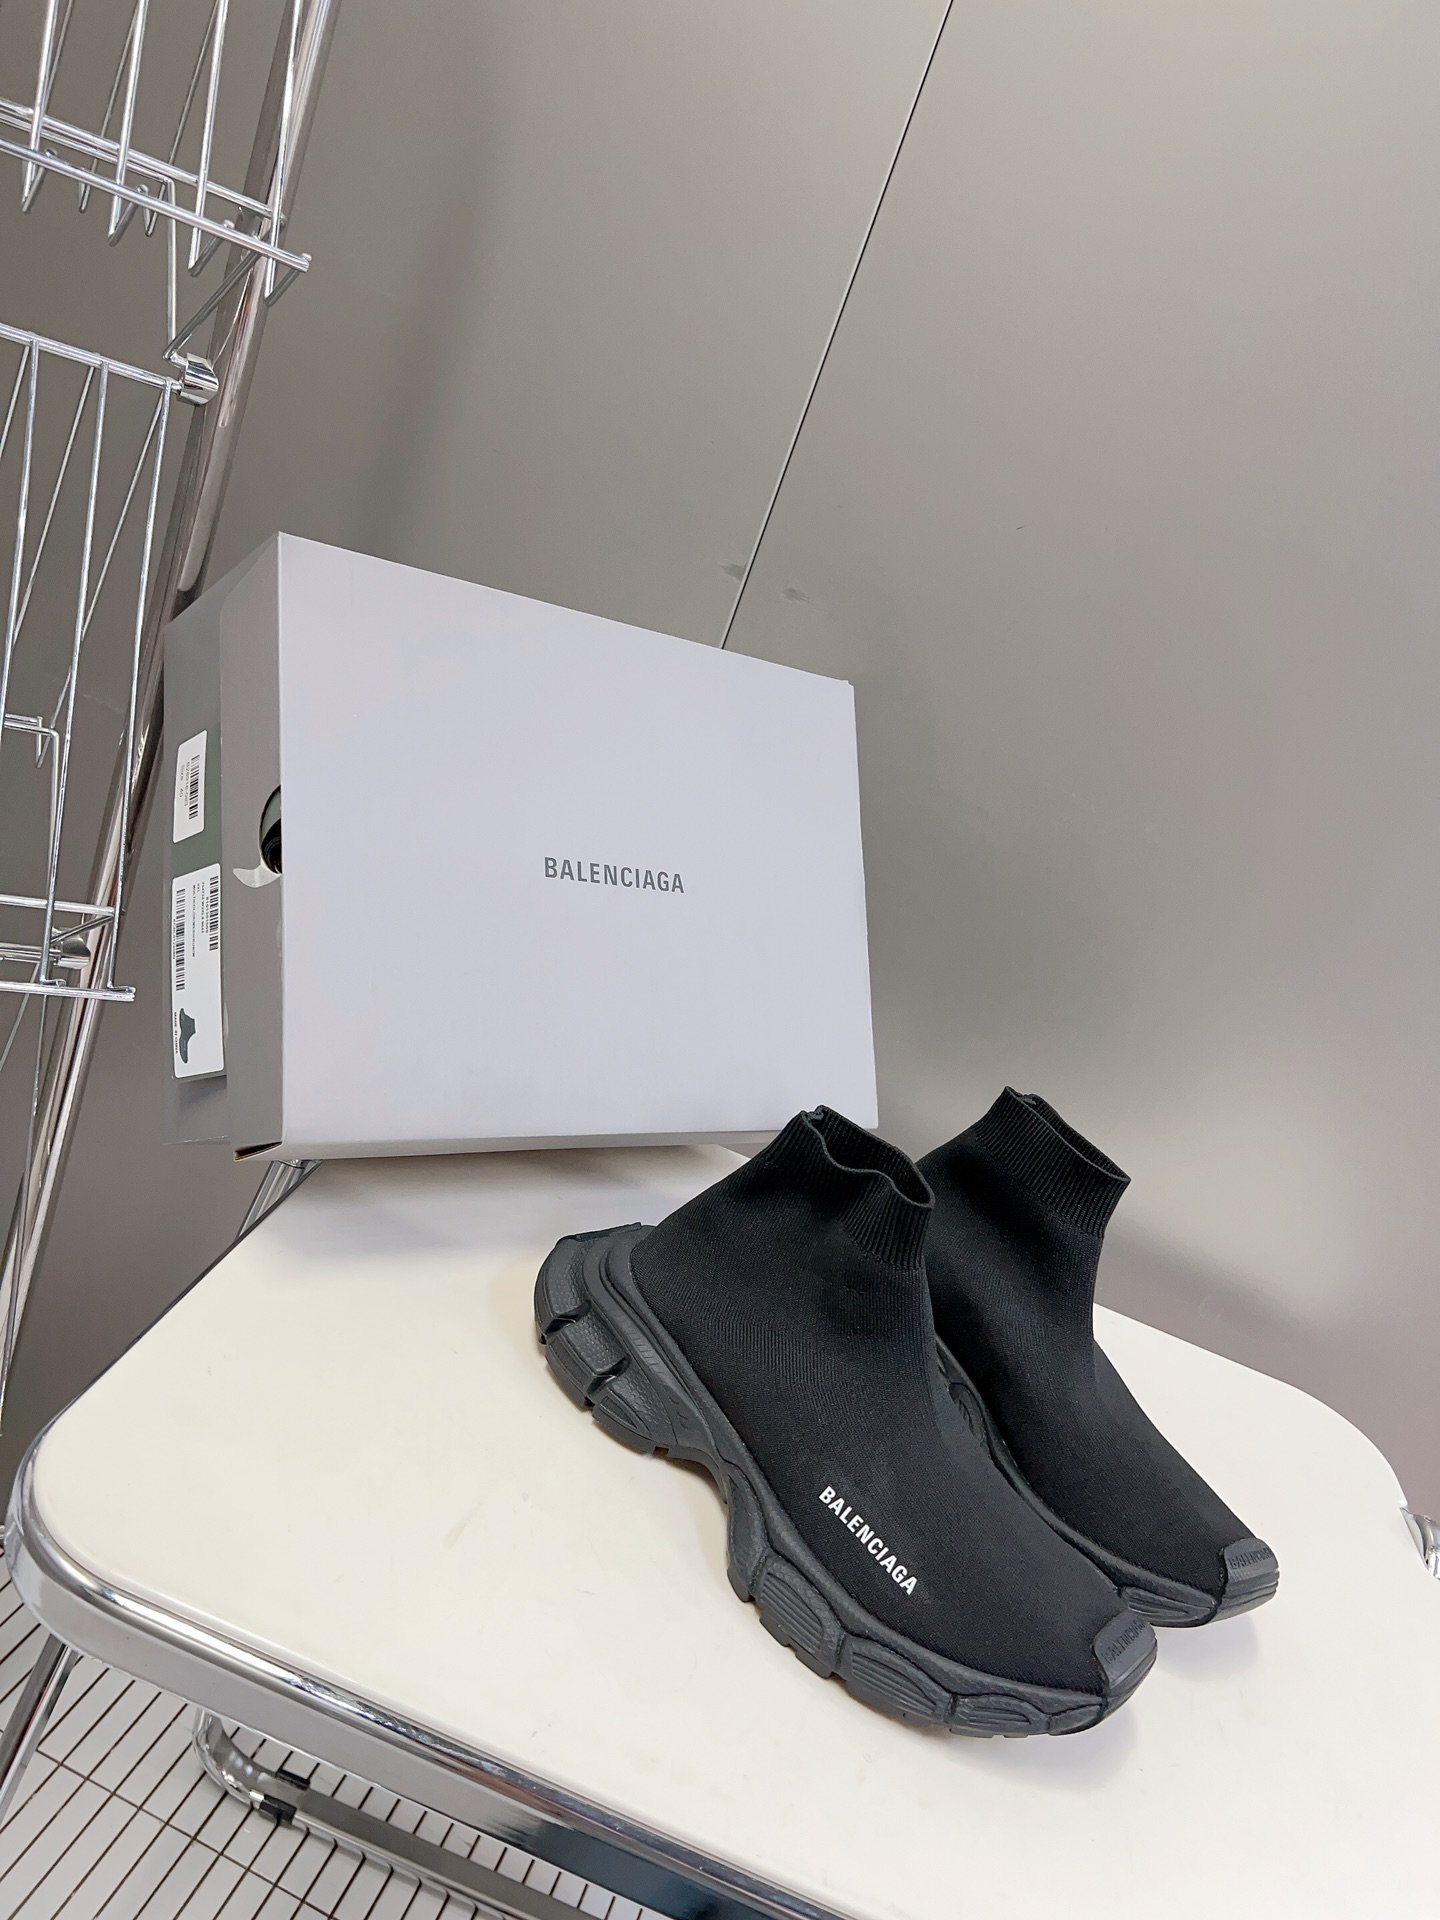 BALENCIAGA巴黎世家3XL出袜子鞋了复古休闲运动鞋系列推出探索时尚界对于原创与挪用的概念以全新系